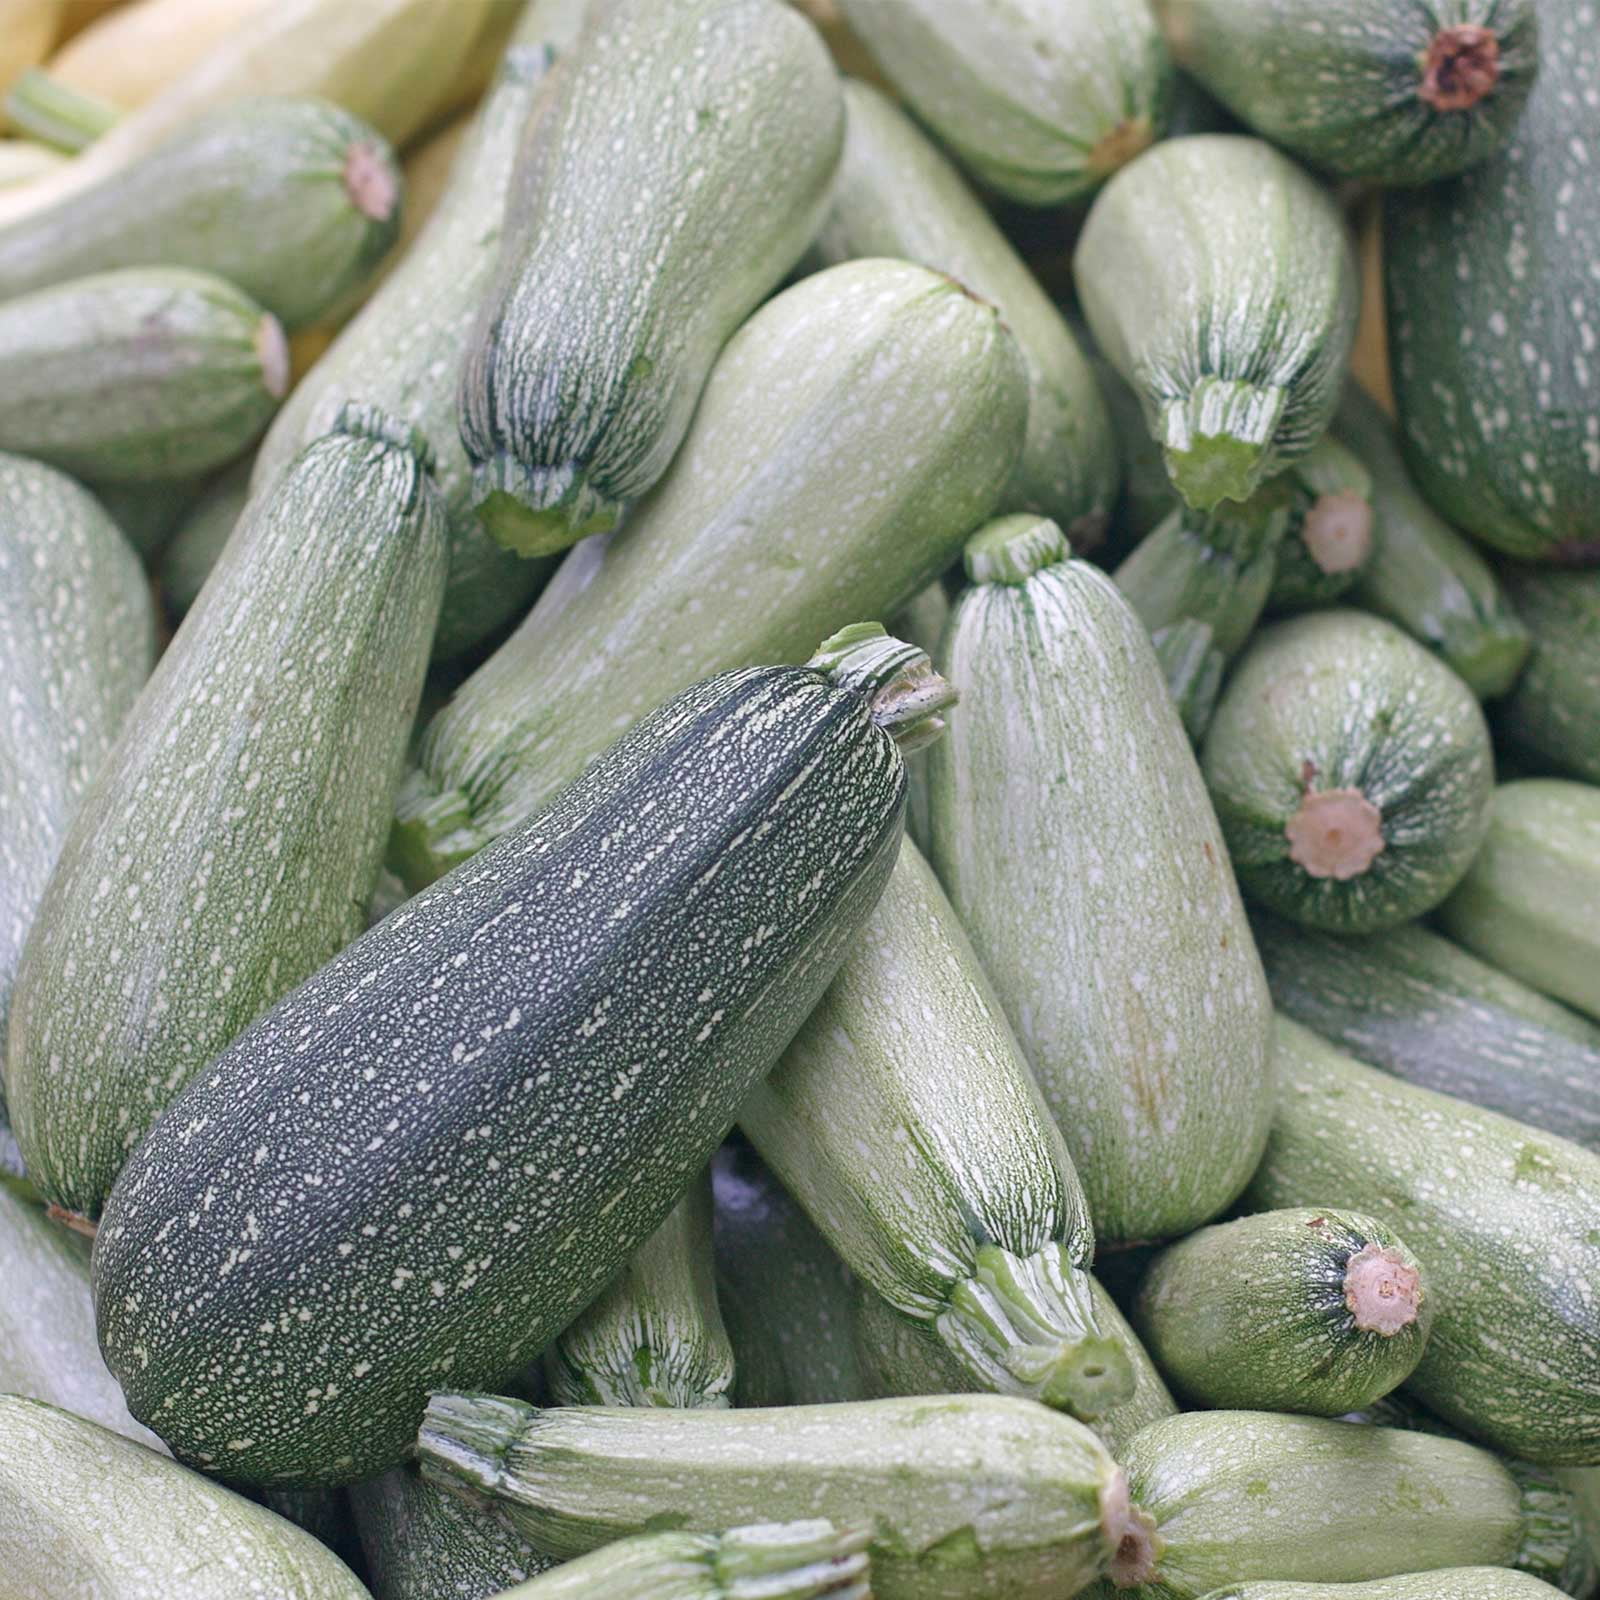 50 Round Zucchini Summer Squash SeedsNon-GMO Heirloom Vegetable FREE SHIPPING 